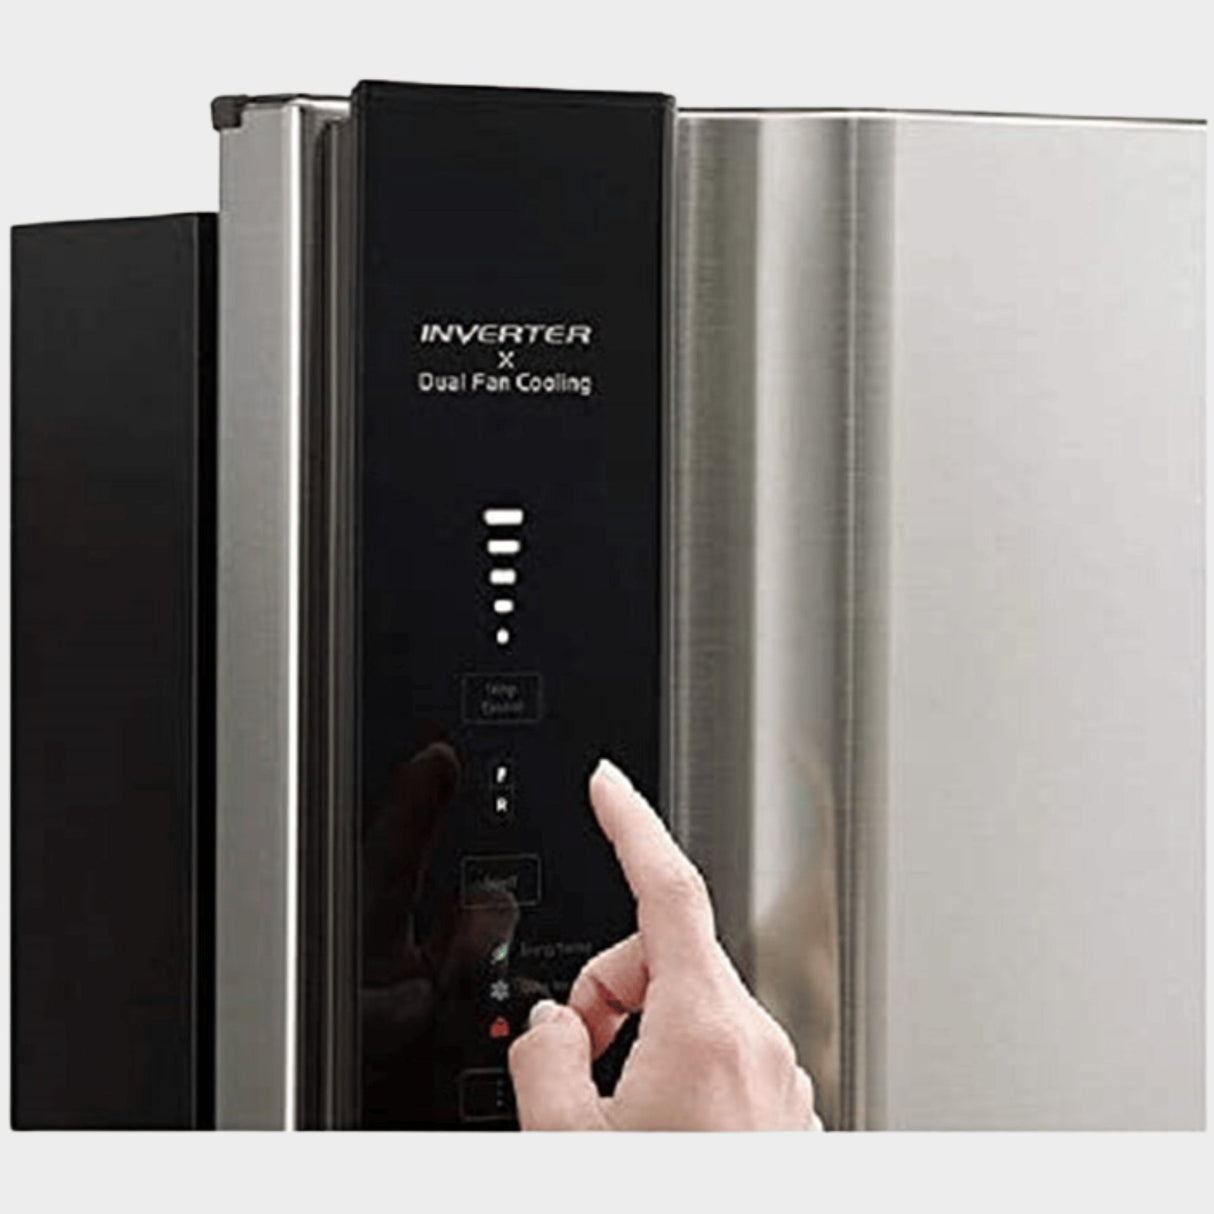 Hitachi 600L Double Door Refrigerator RV750PUN7KBBK – Silver - KWT Tech Mart